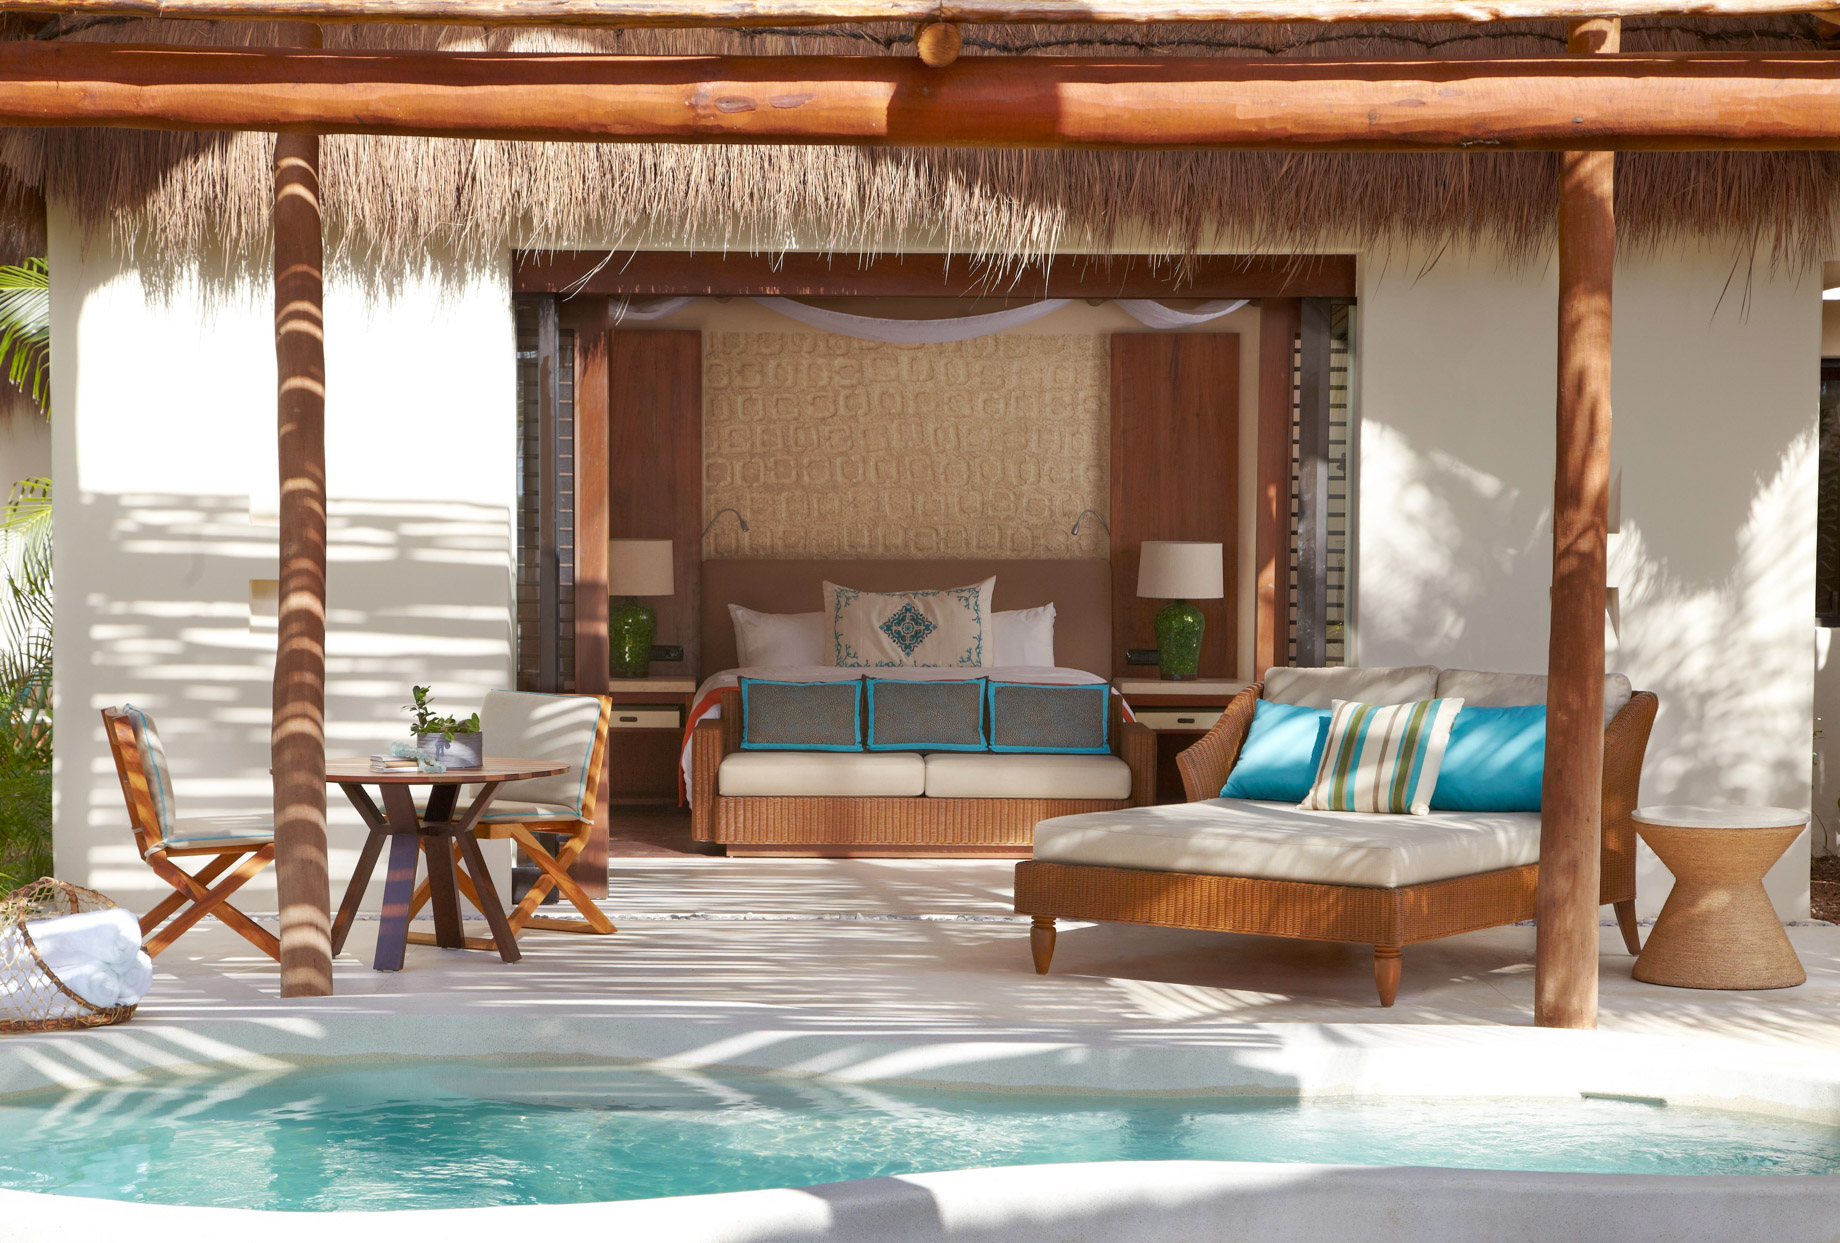 Viceroy Riviera Maya Resort – Playa del Carmen, Mexico – Viceroy Villa